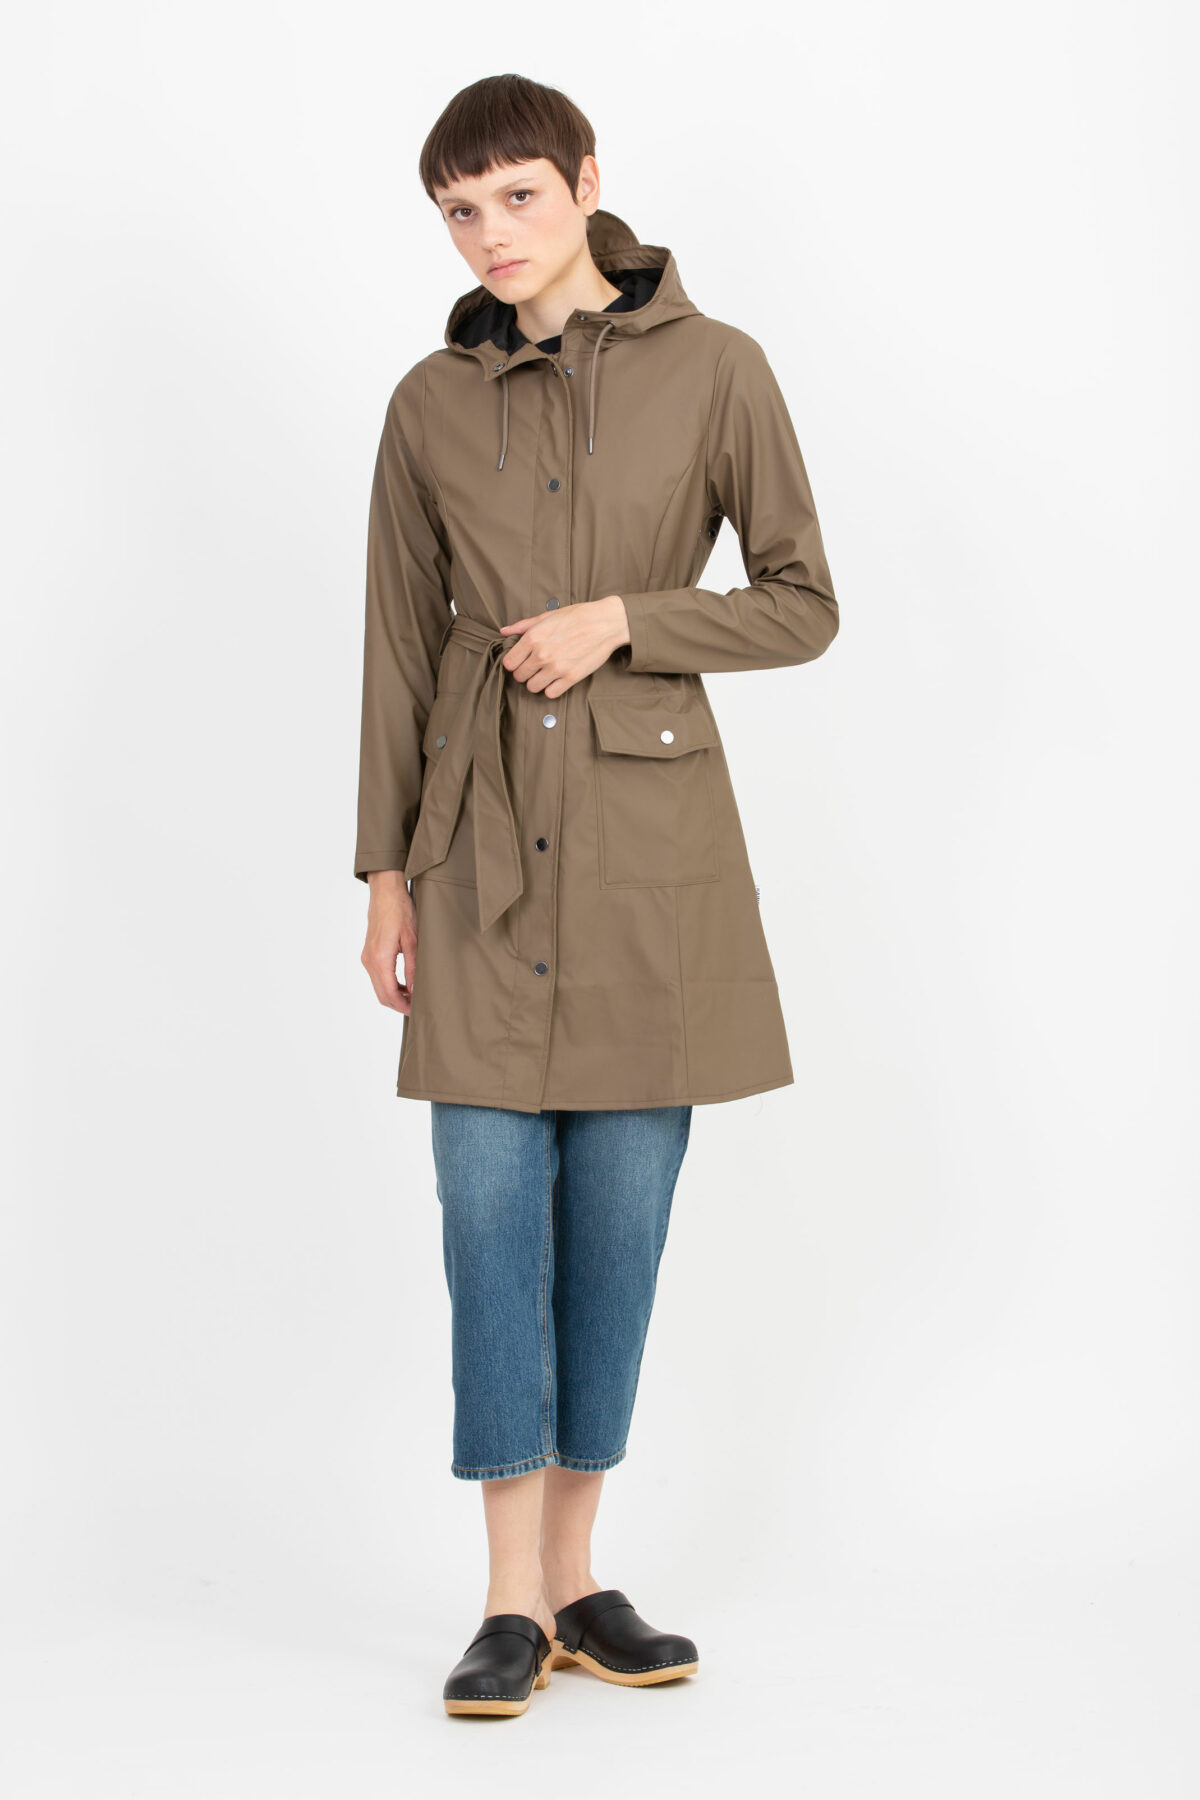 curve-raincoat-wood-rains-matchboxathens-waterproof